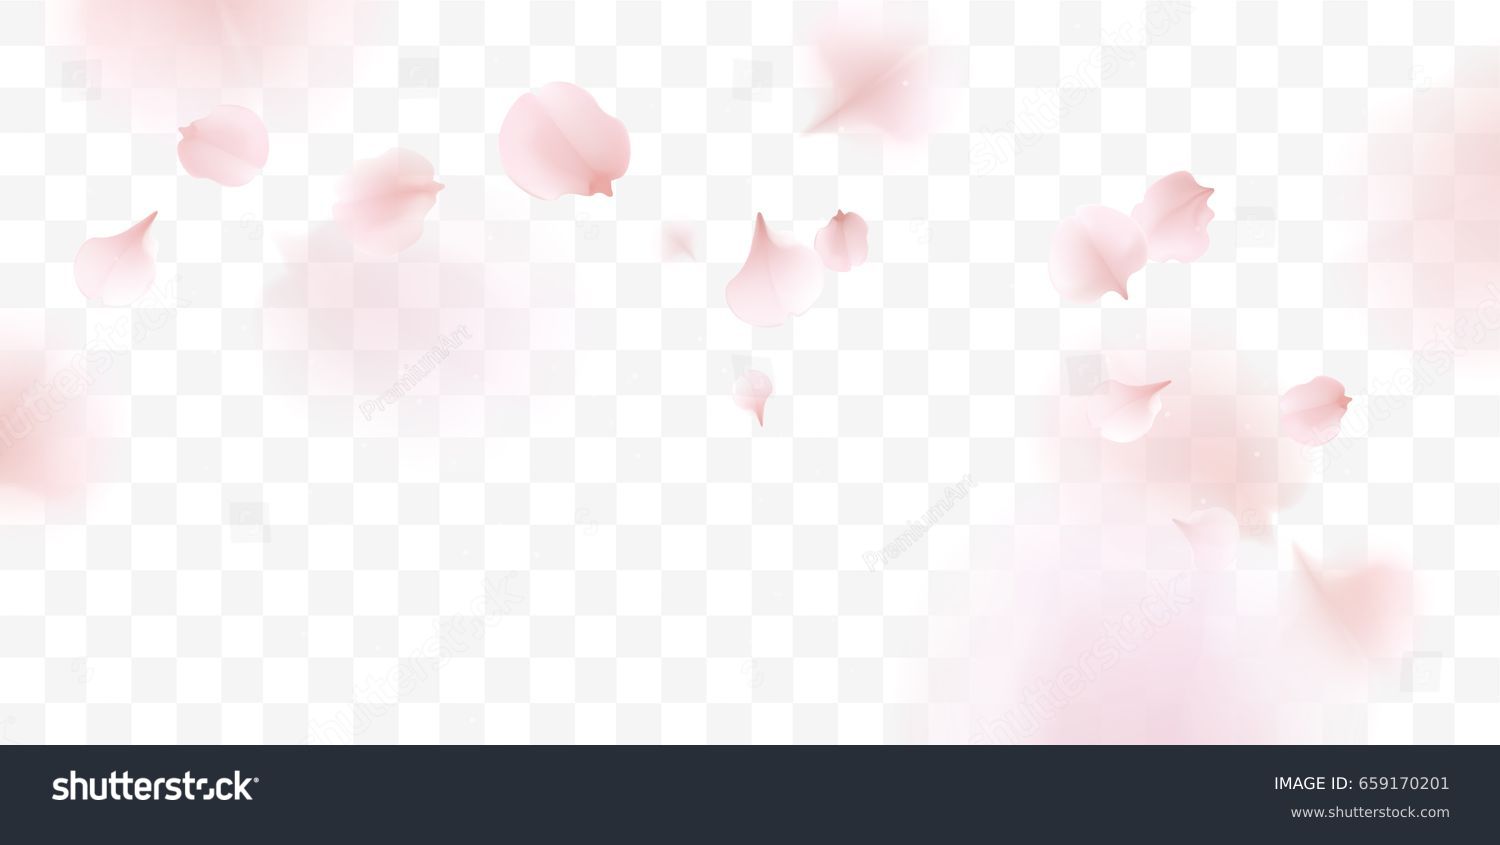 Pink sakura falling petals vector background. 3D romantic illustration #659170201